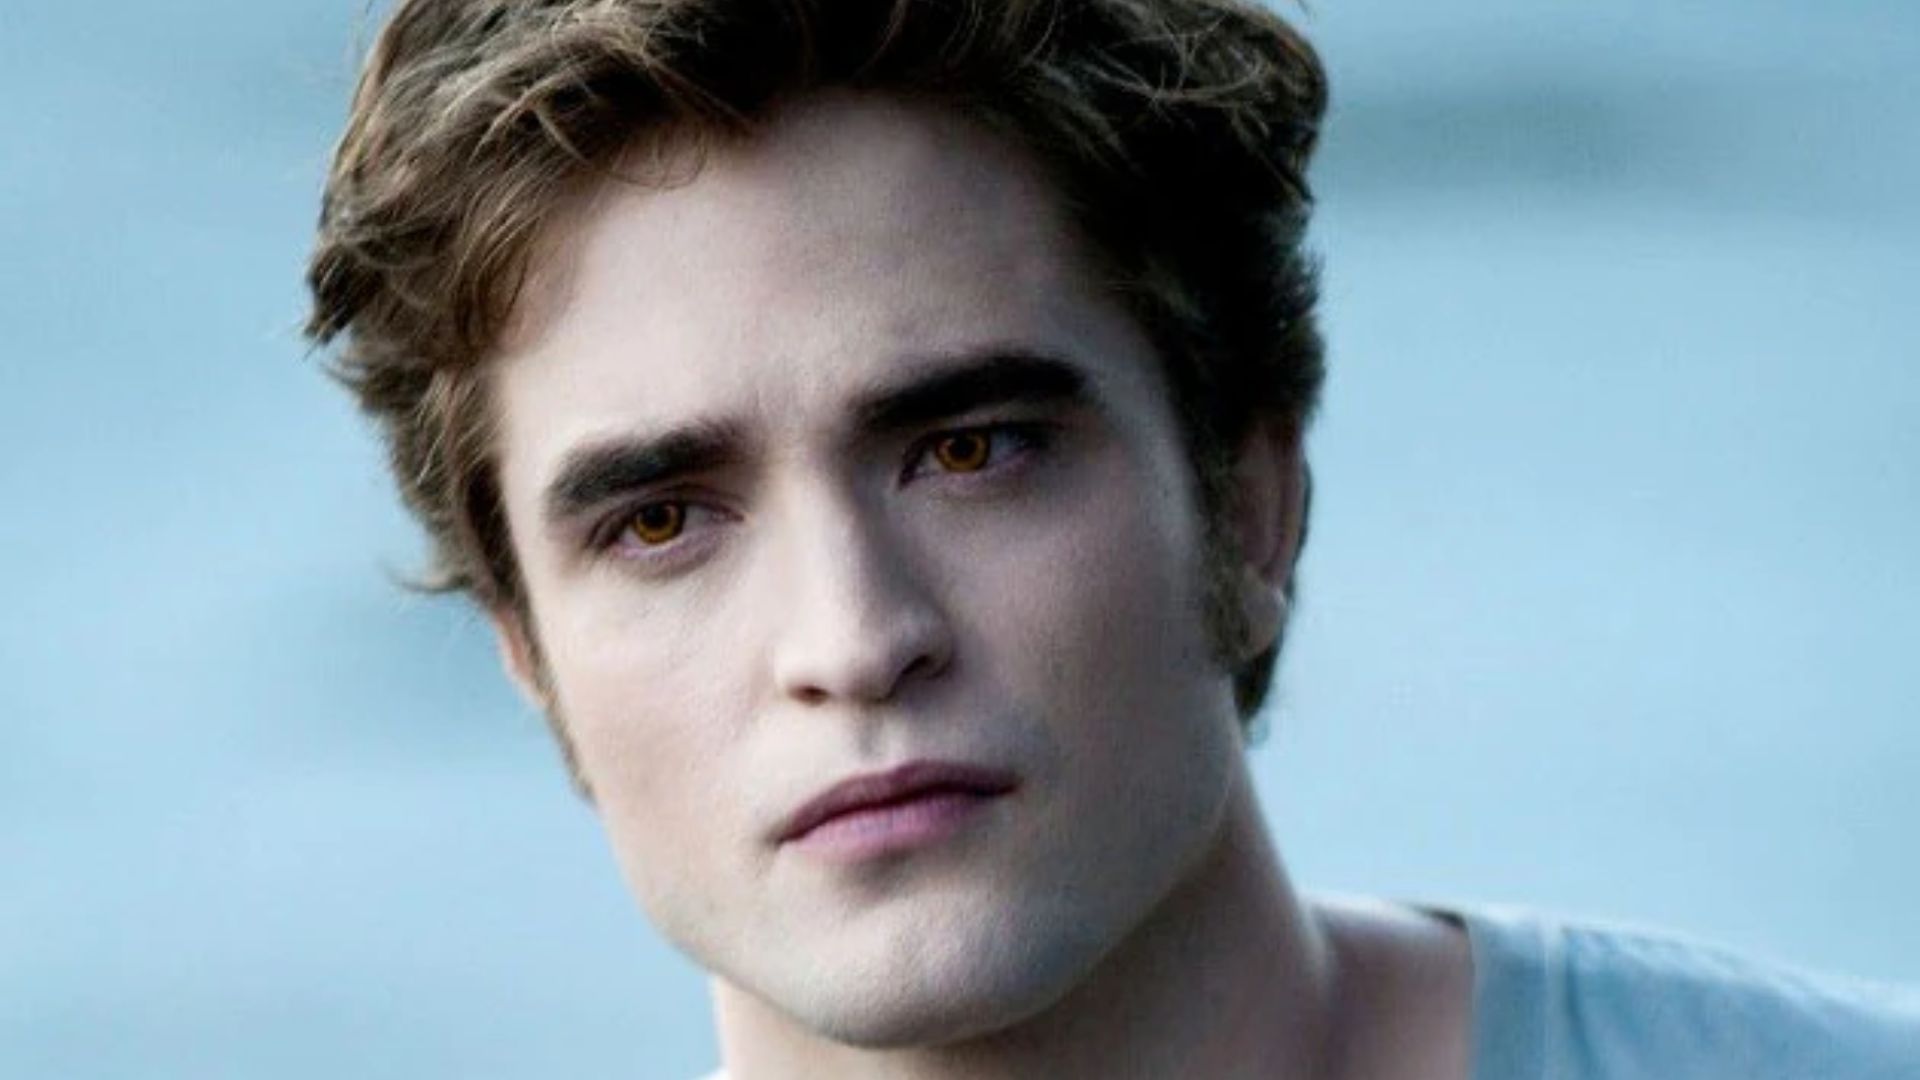 Robert Pattinson as Edward Cullens